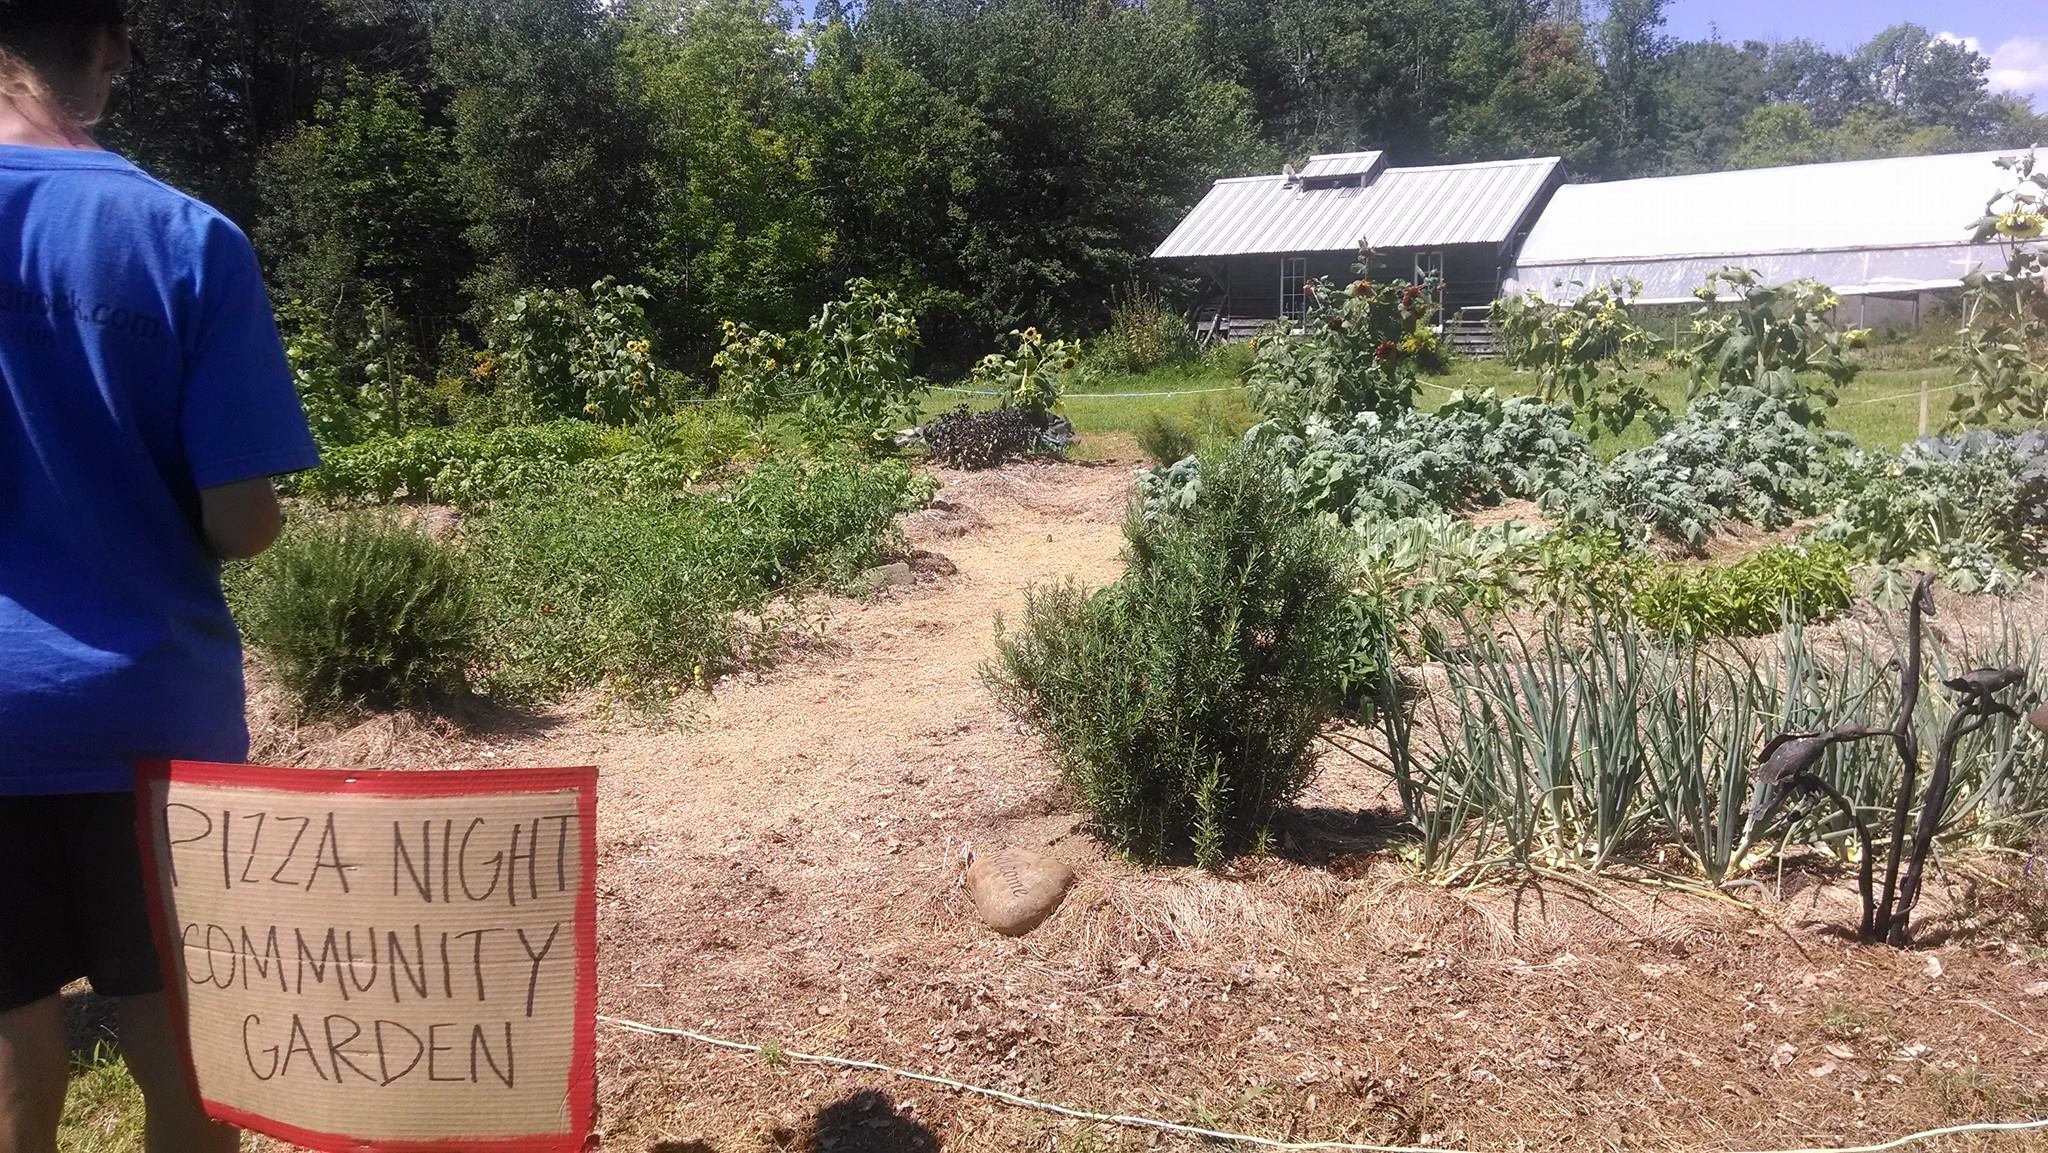 well-grown garden with a sign reading 'pizza night communi garden'